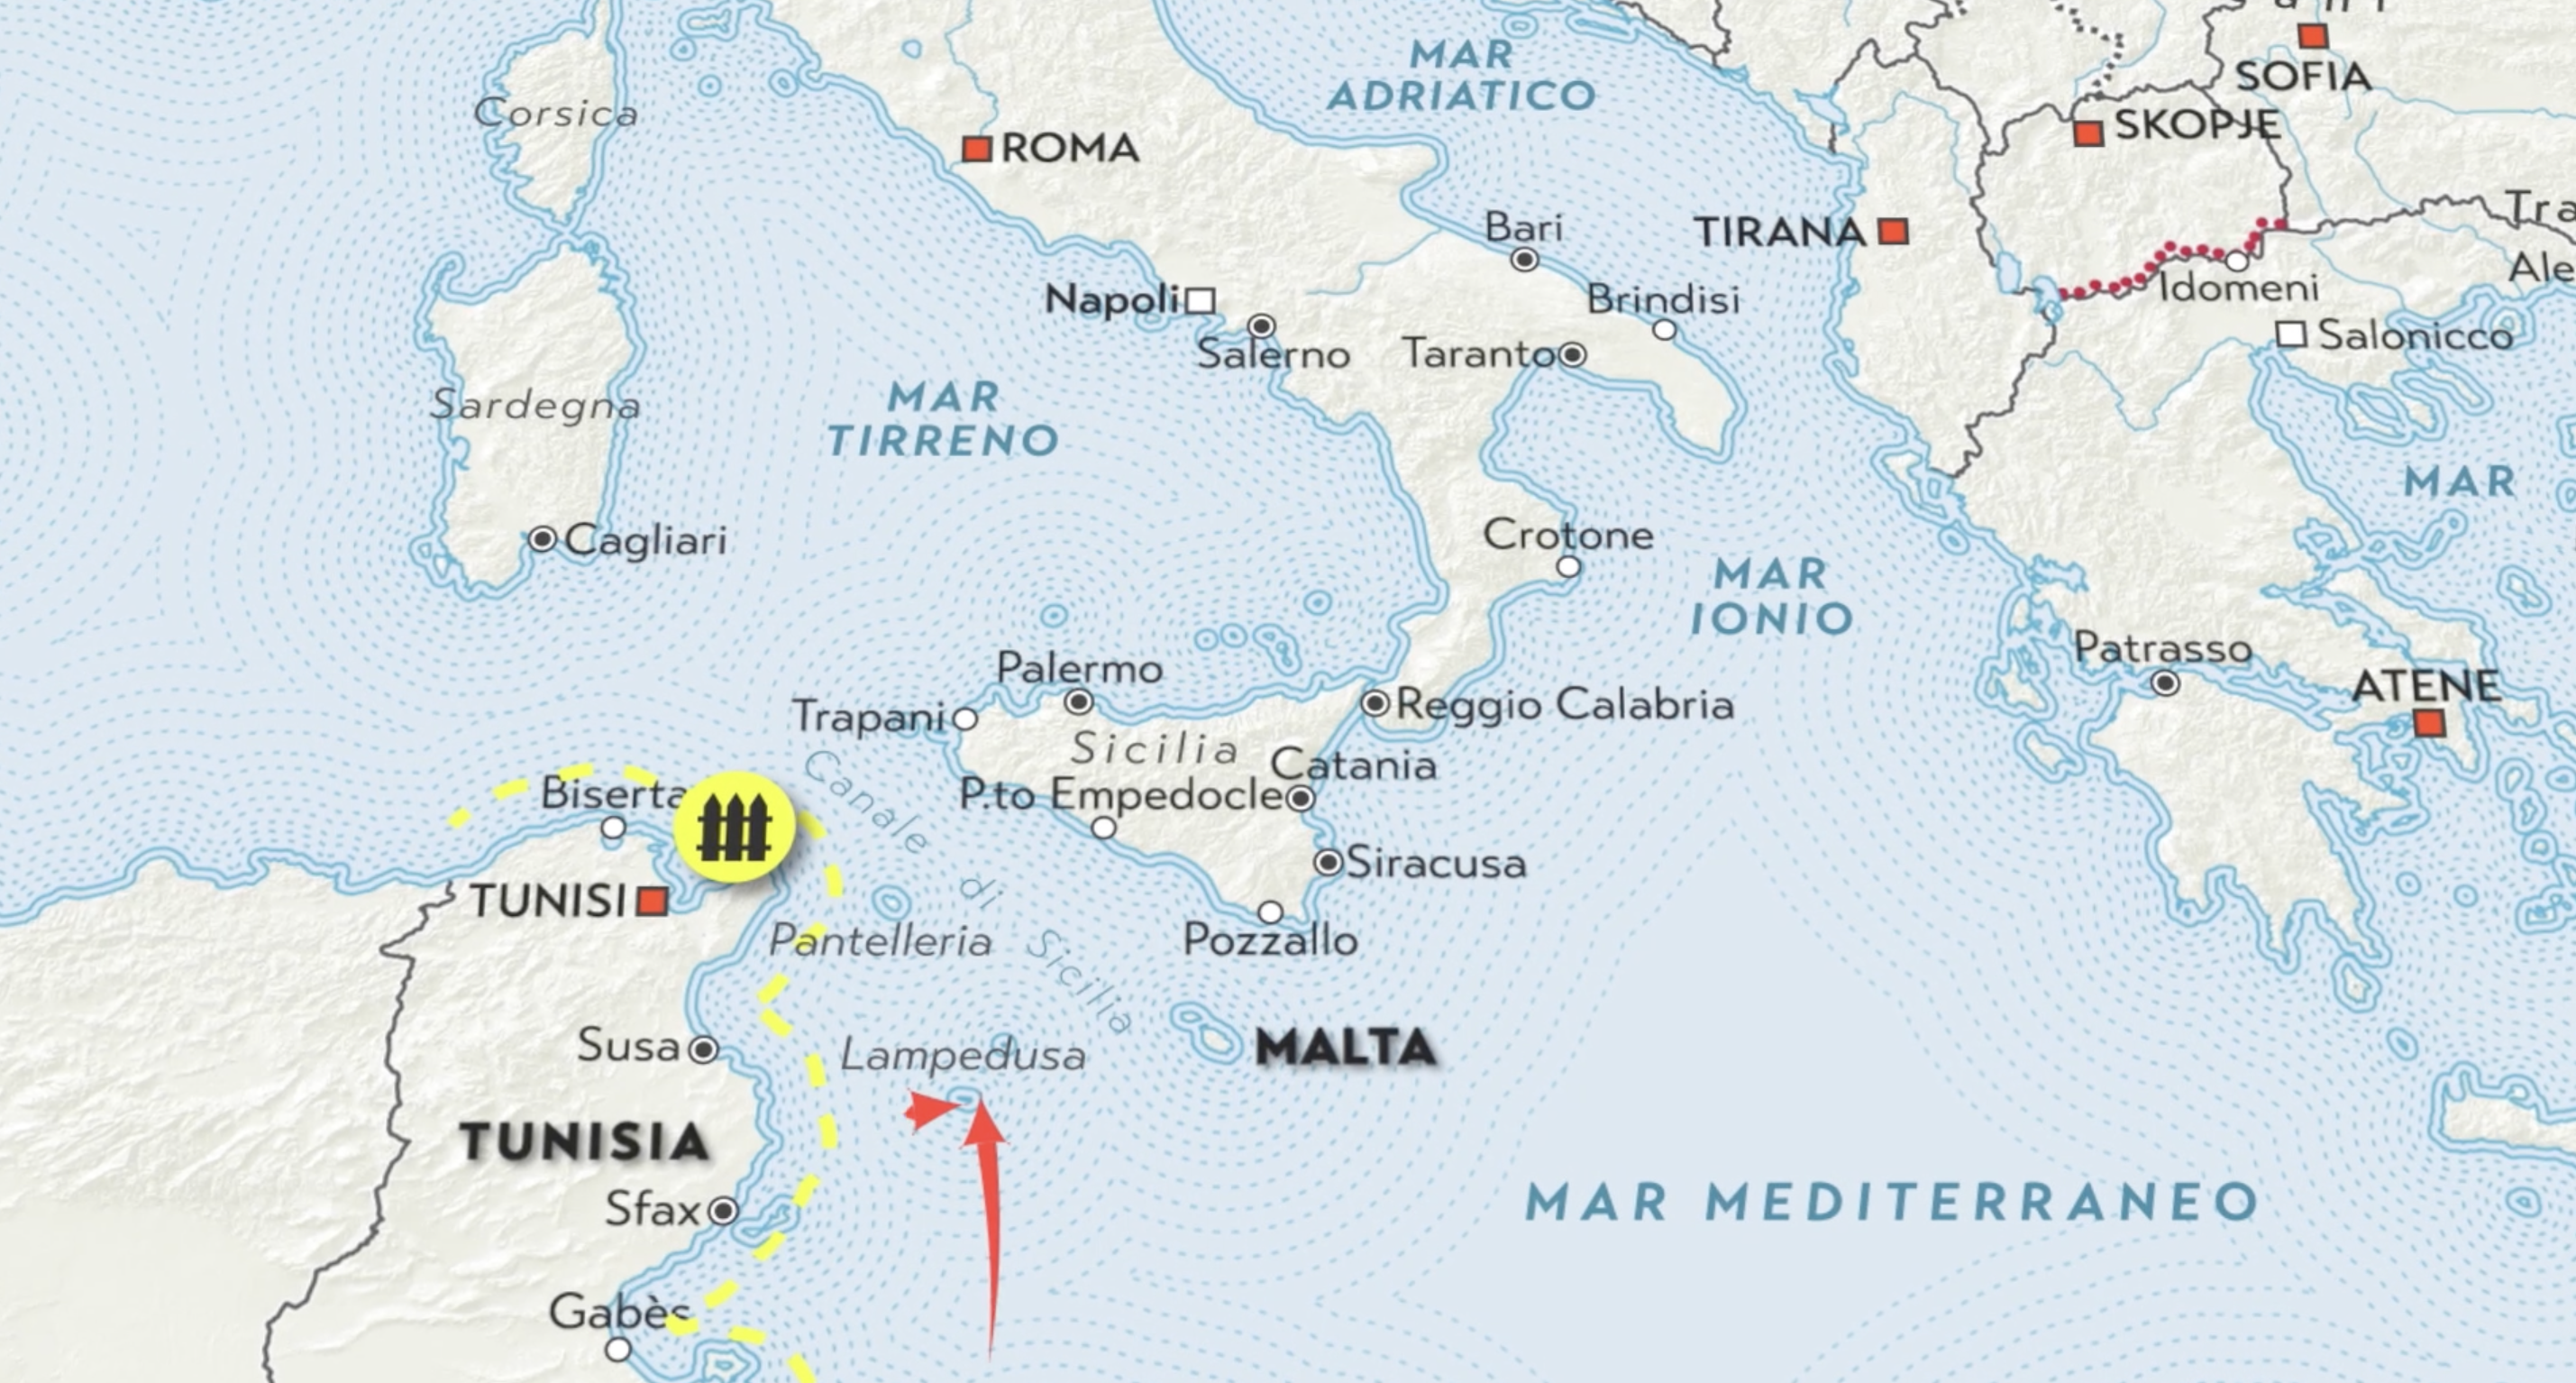 Migrations across the Mediterranean Sea